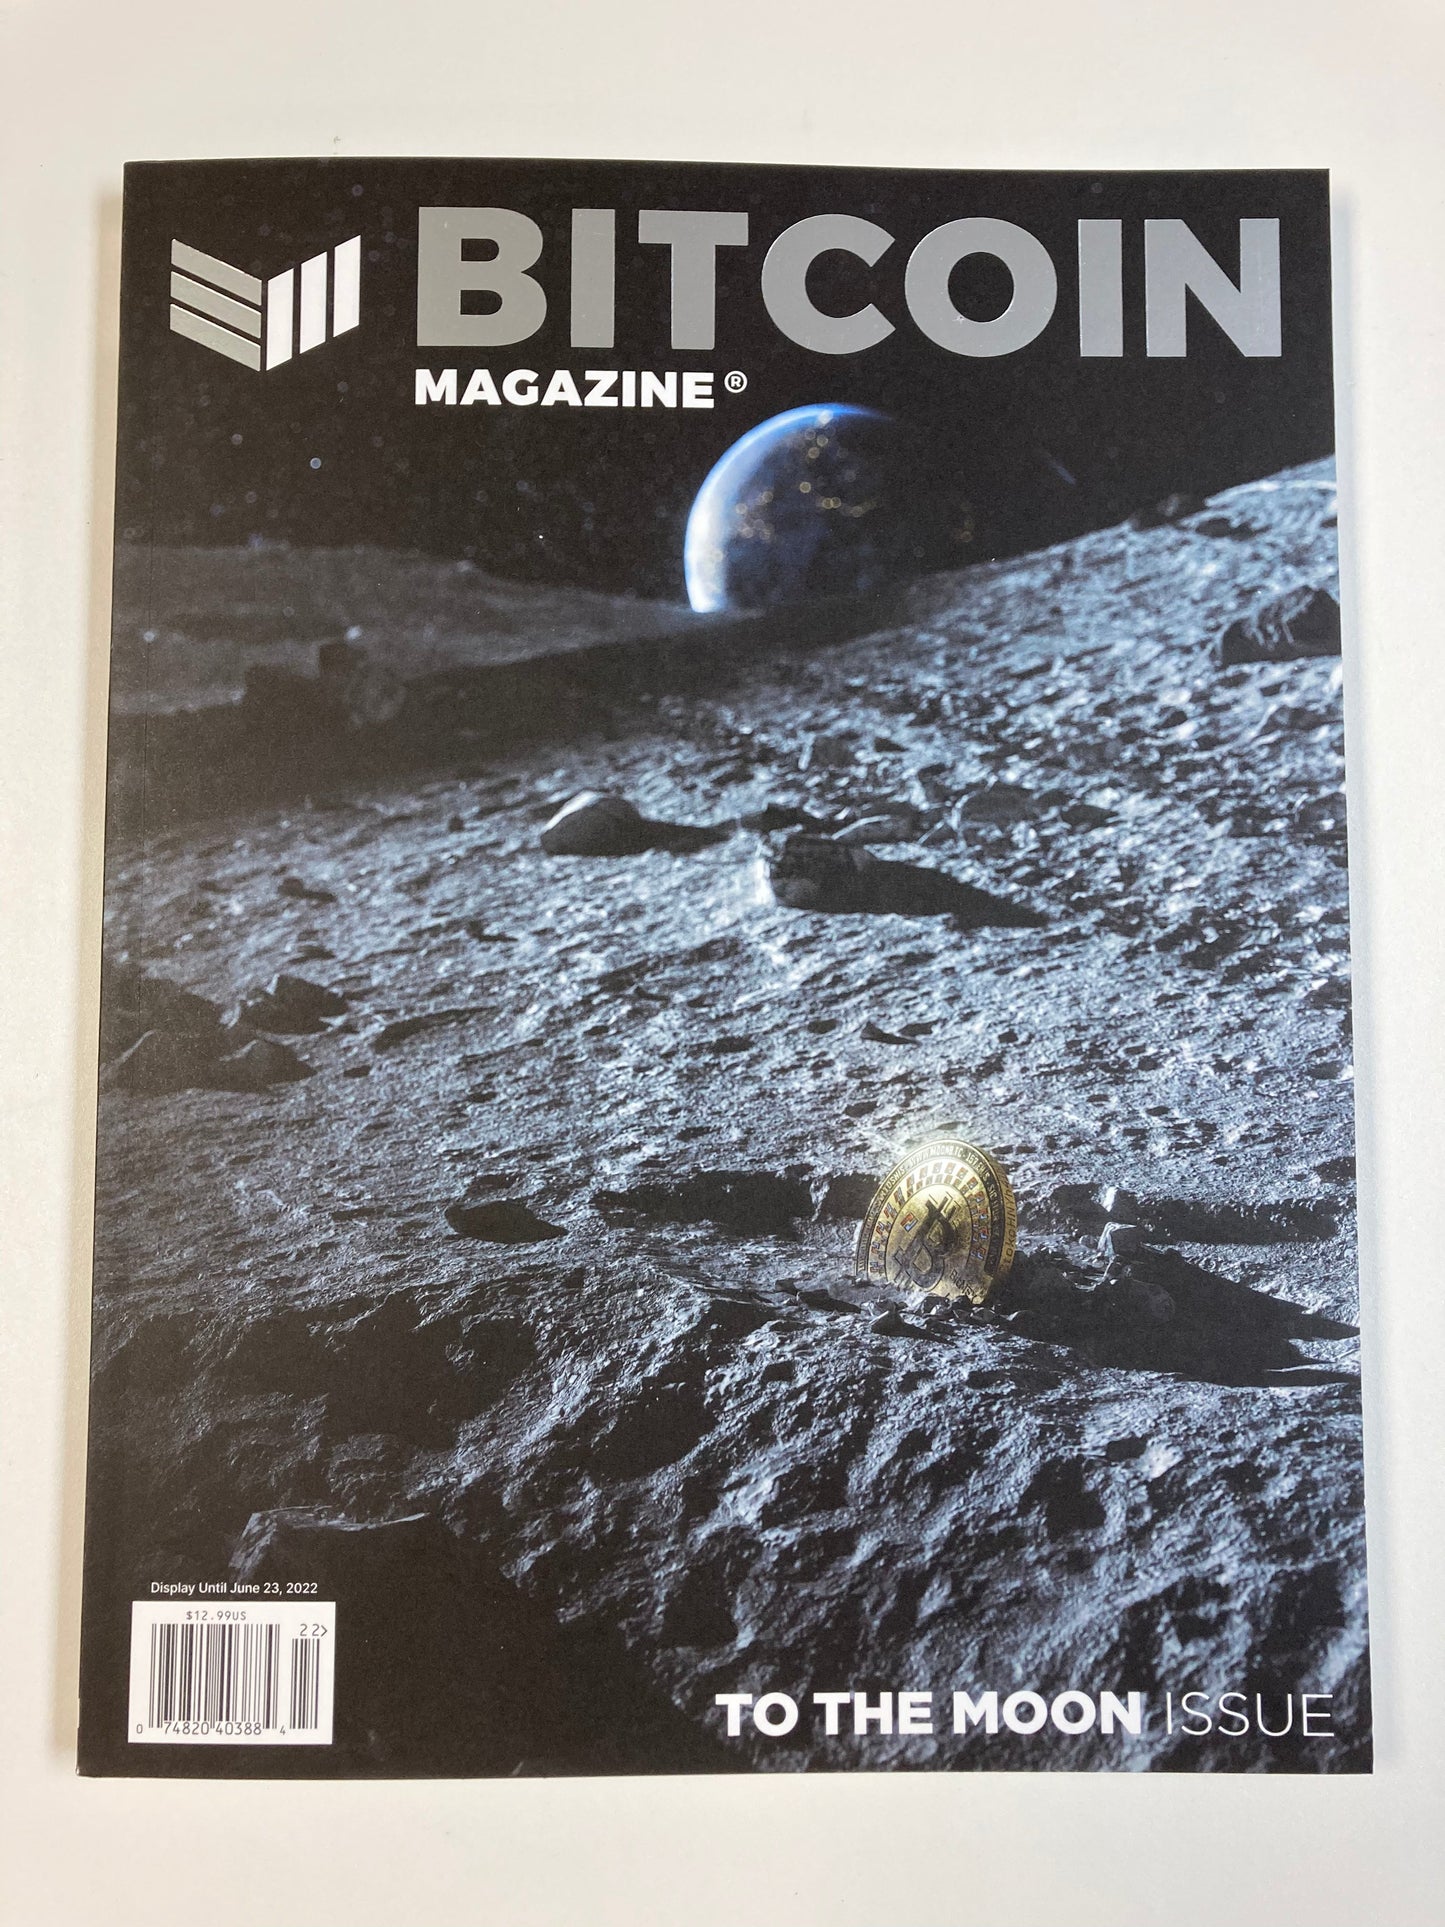 Bitcoin Magazine - The Moon Issue